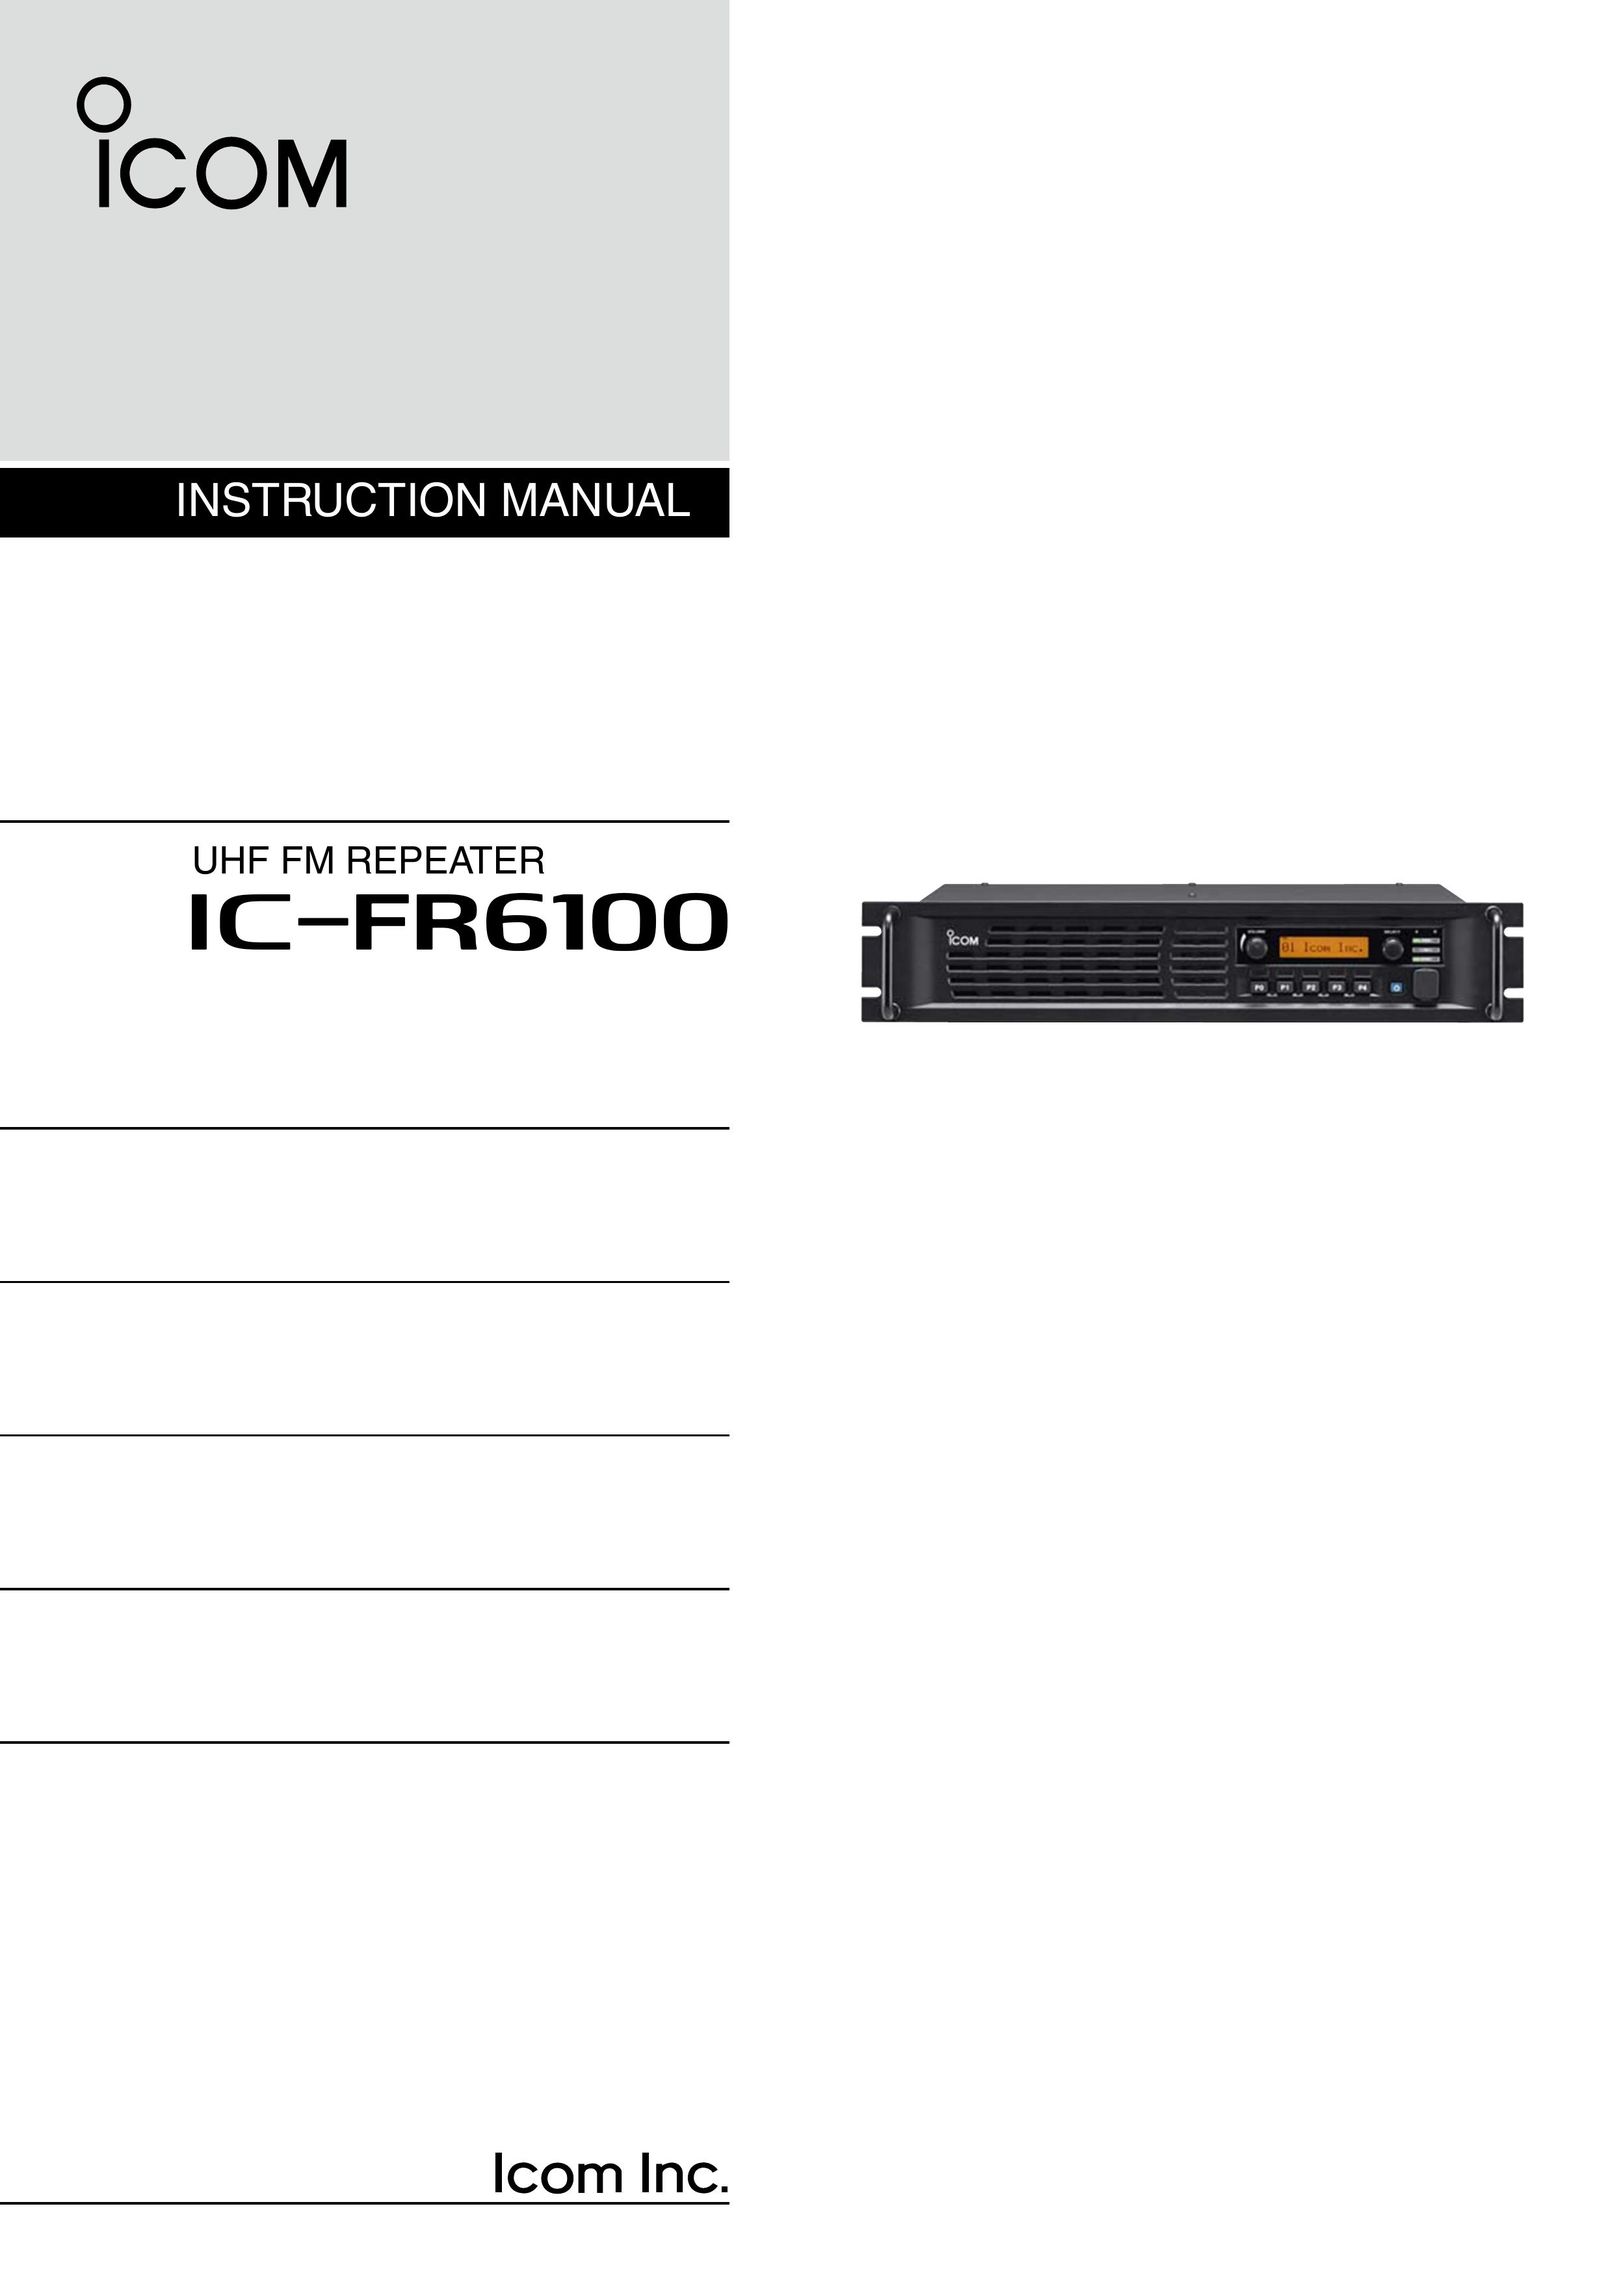 Icom iFR6100 Stereo Receiver User Manual